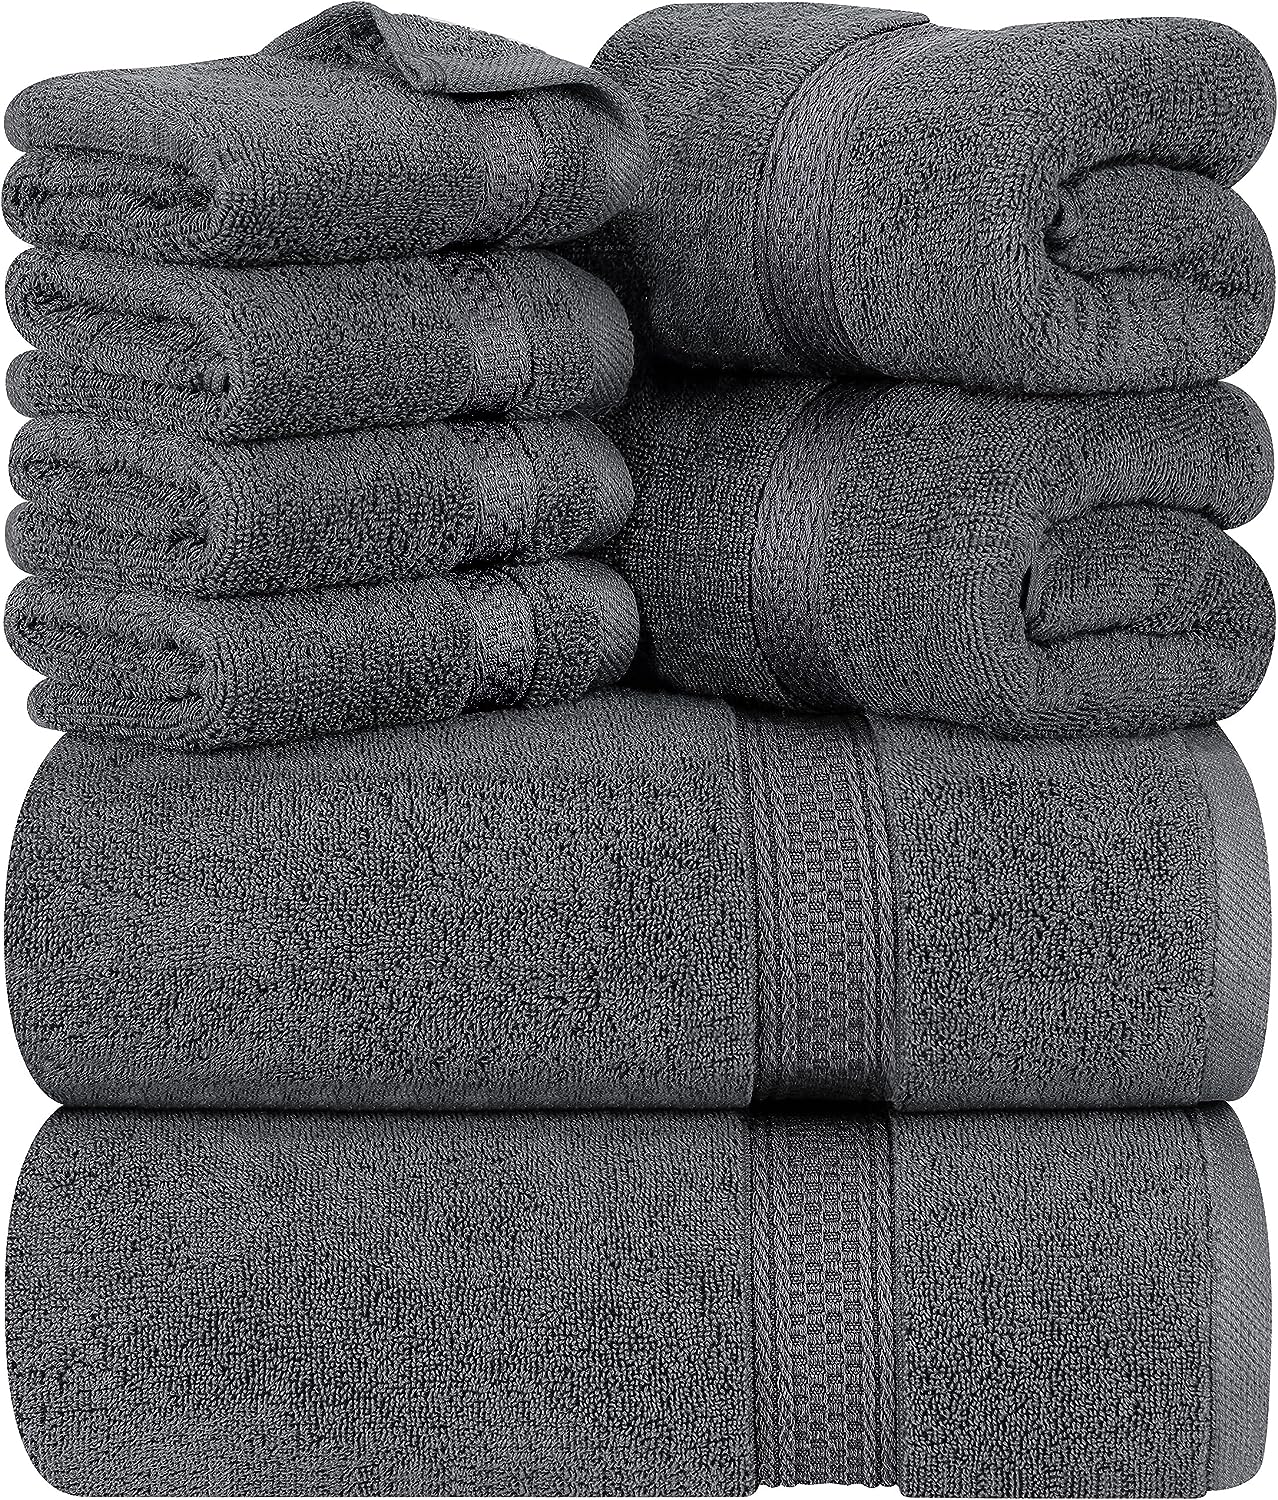 6 Pack Premium Large Bath Towels Cotton 24 x 48 inch Brown & Gray Color.